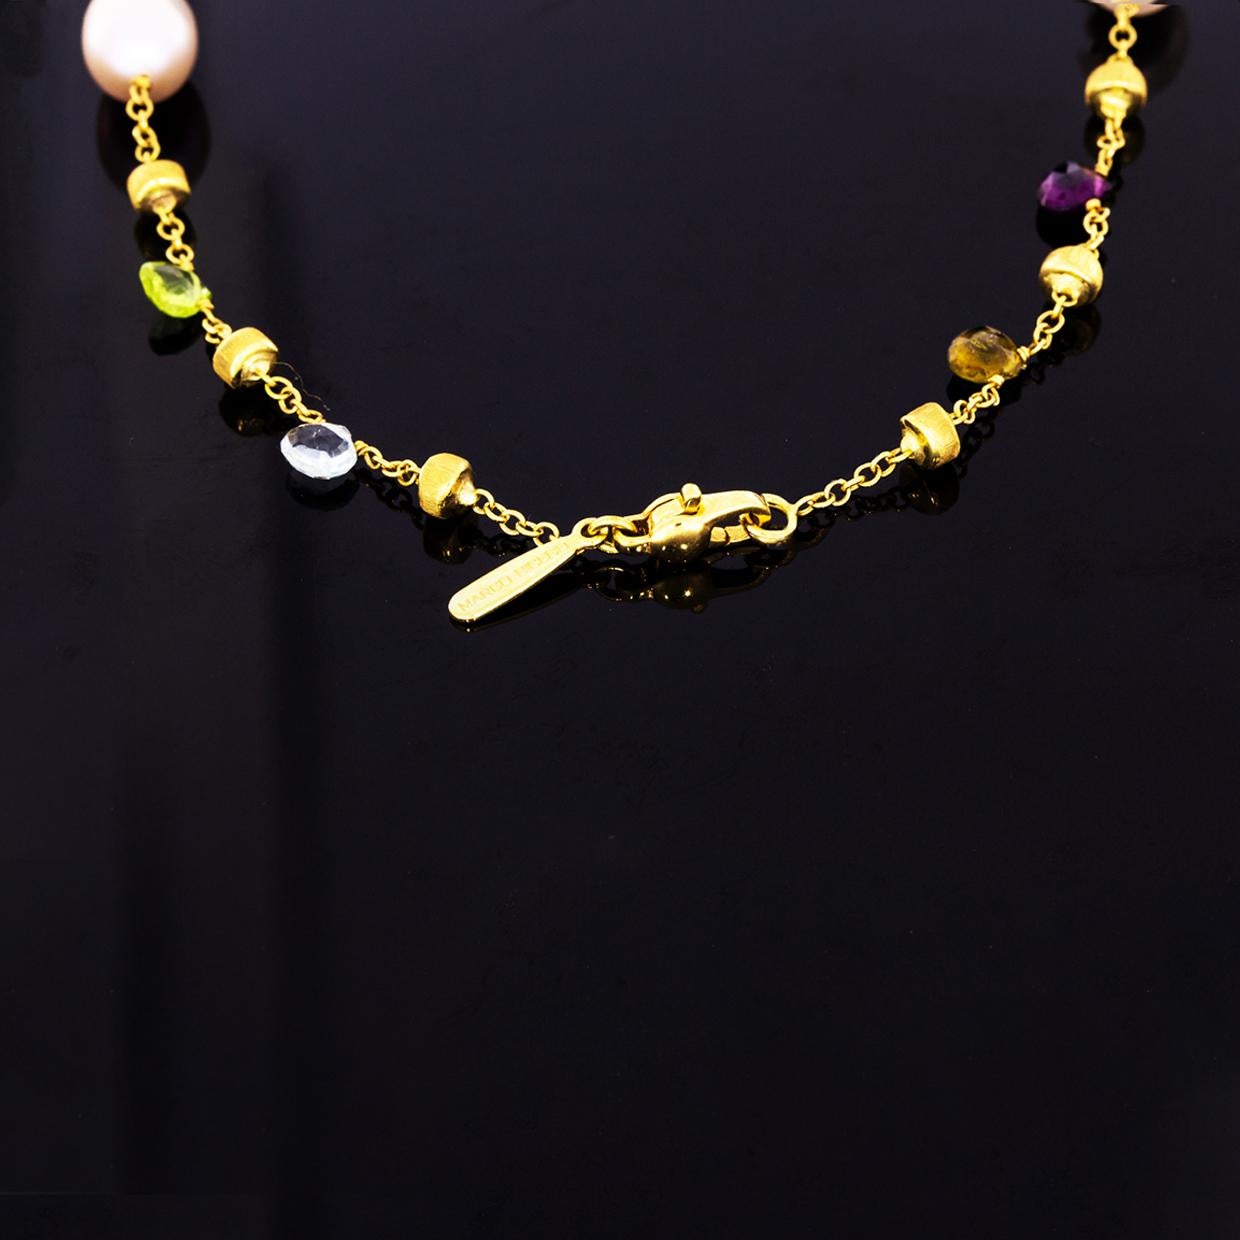 marco bicego paradise necklace sale